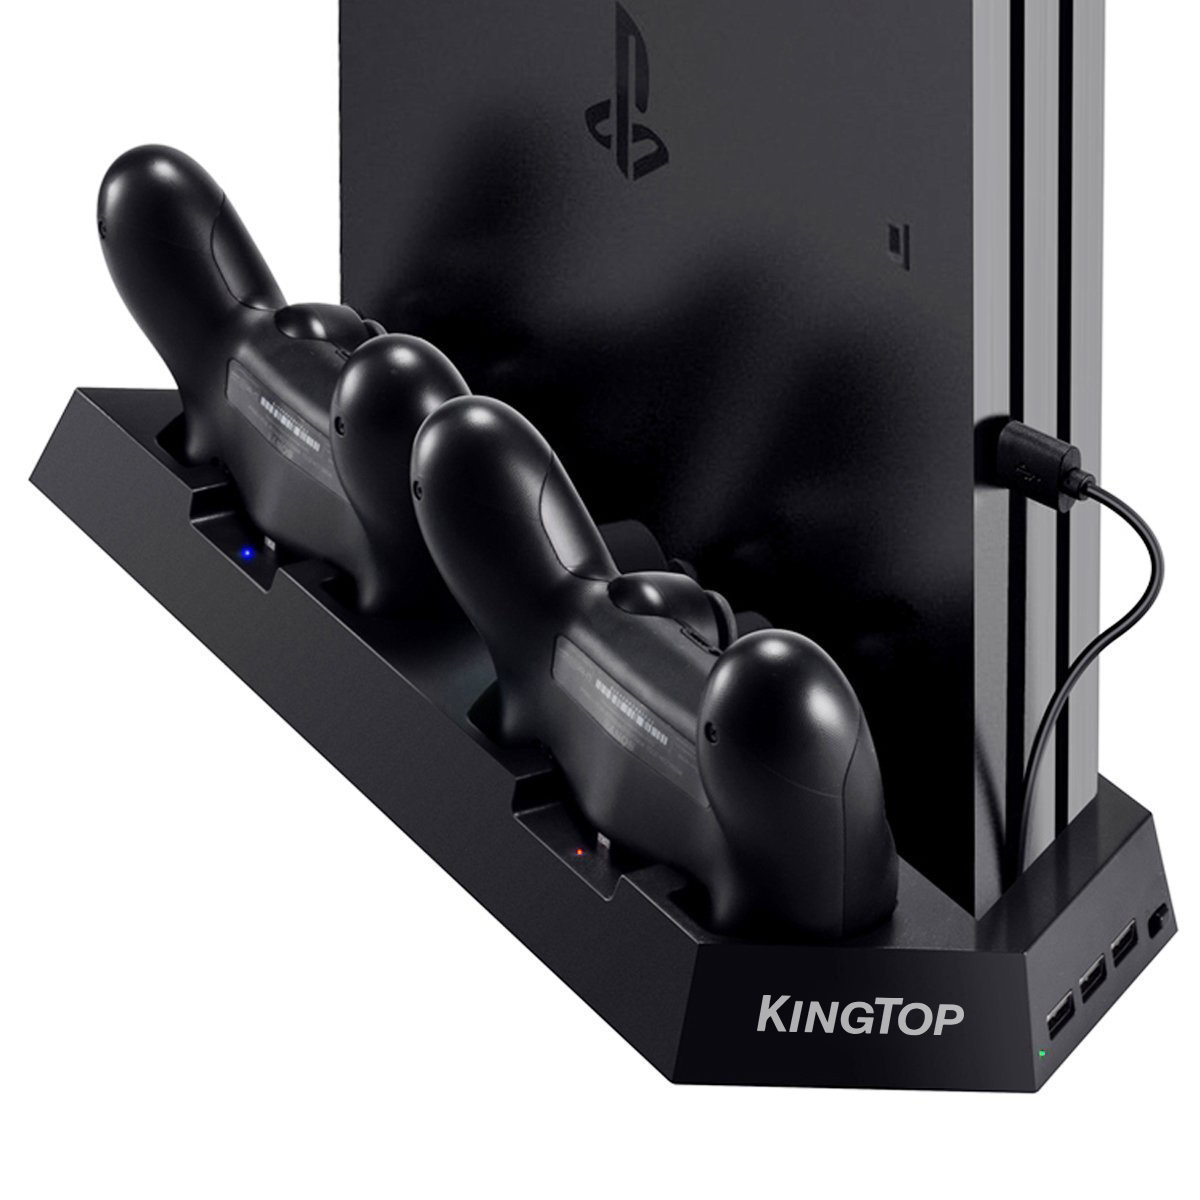 KINGTOP AKTUALISIERTE Ladestation für vertikales Stativ für PS4 / PS4 Pro / PS4 Slim